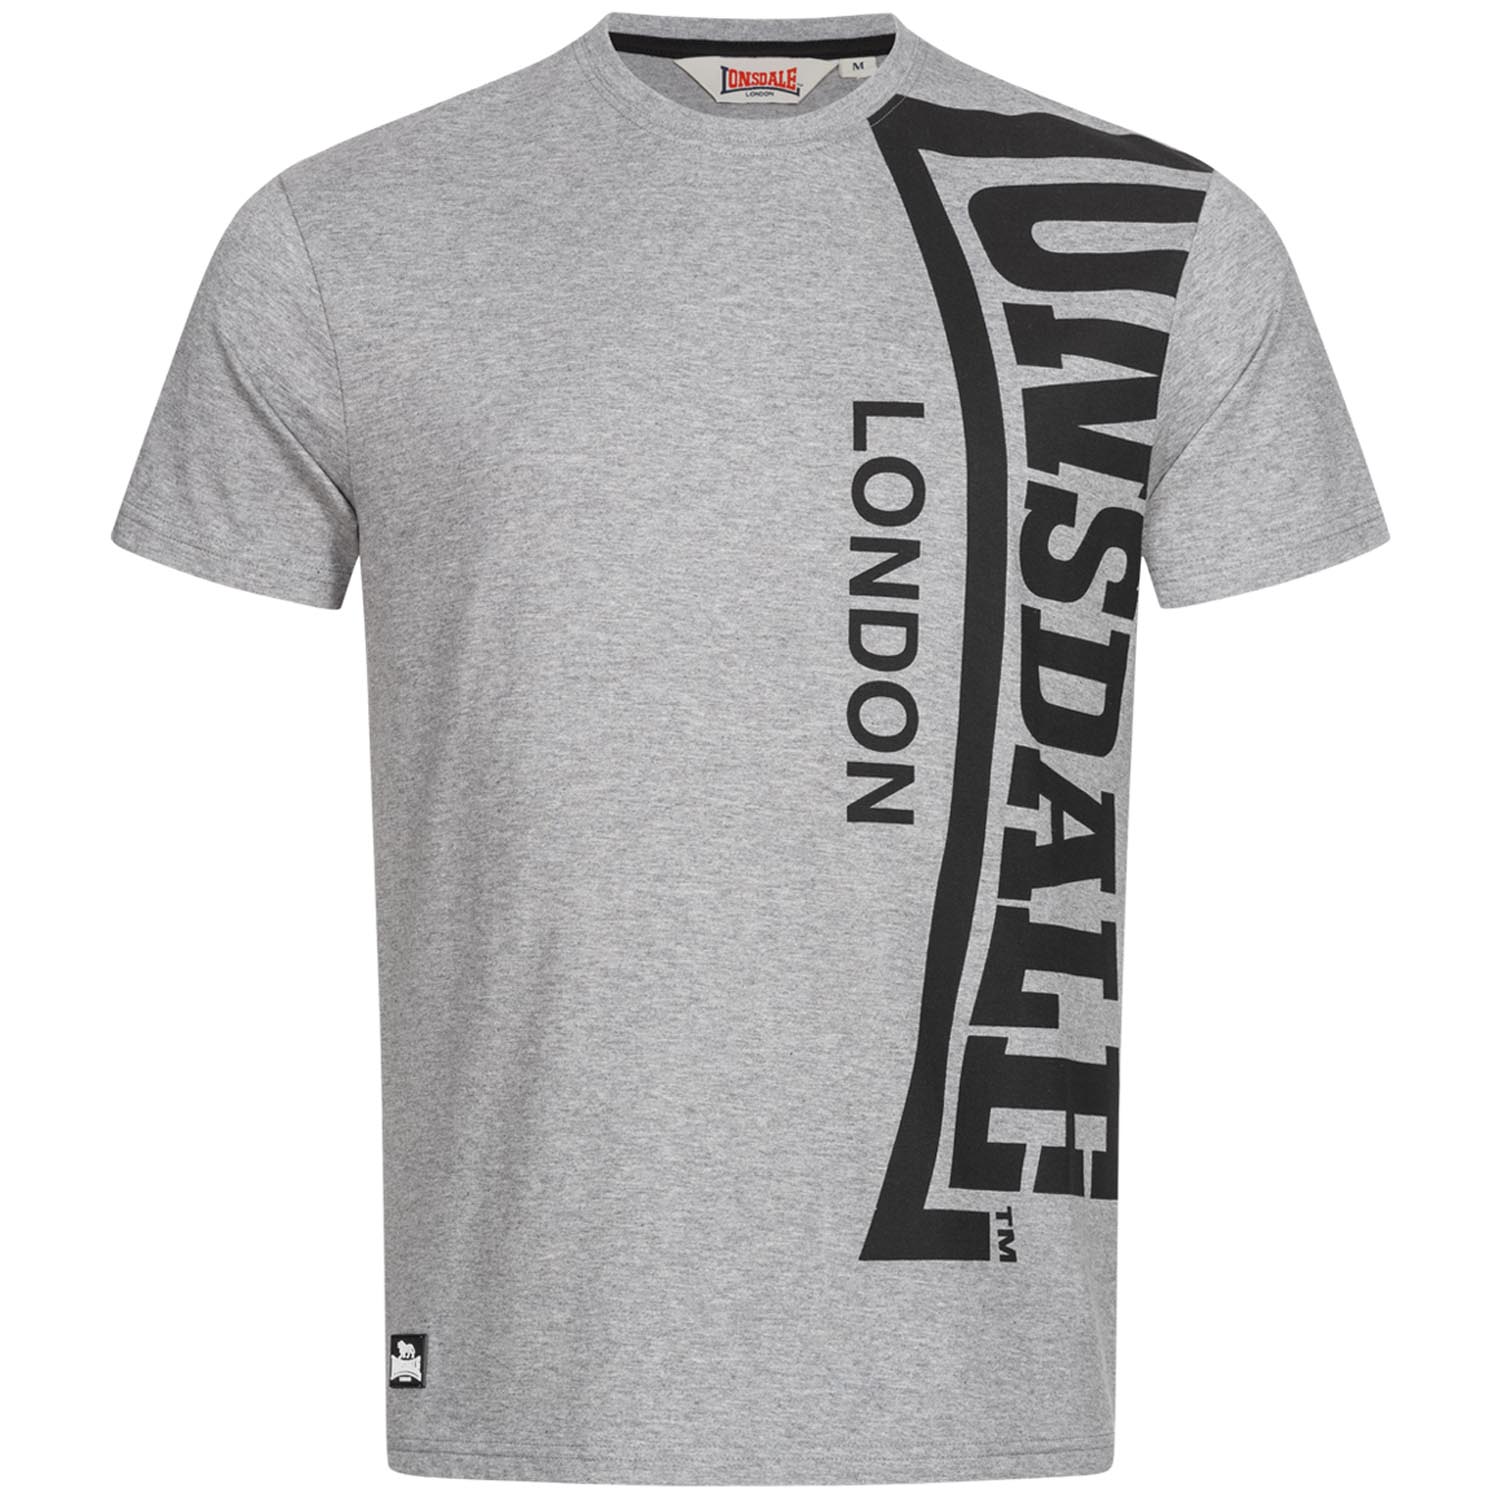 Lonsdale T-Shirt, Holyrood, grau, S